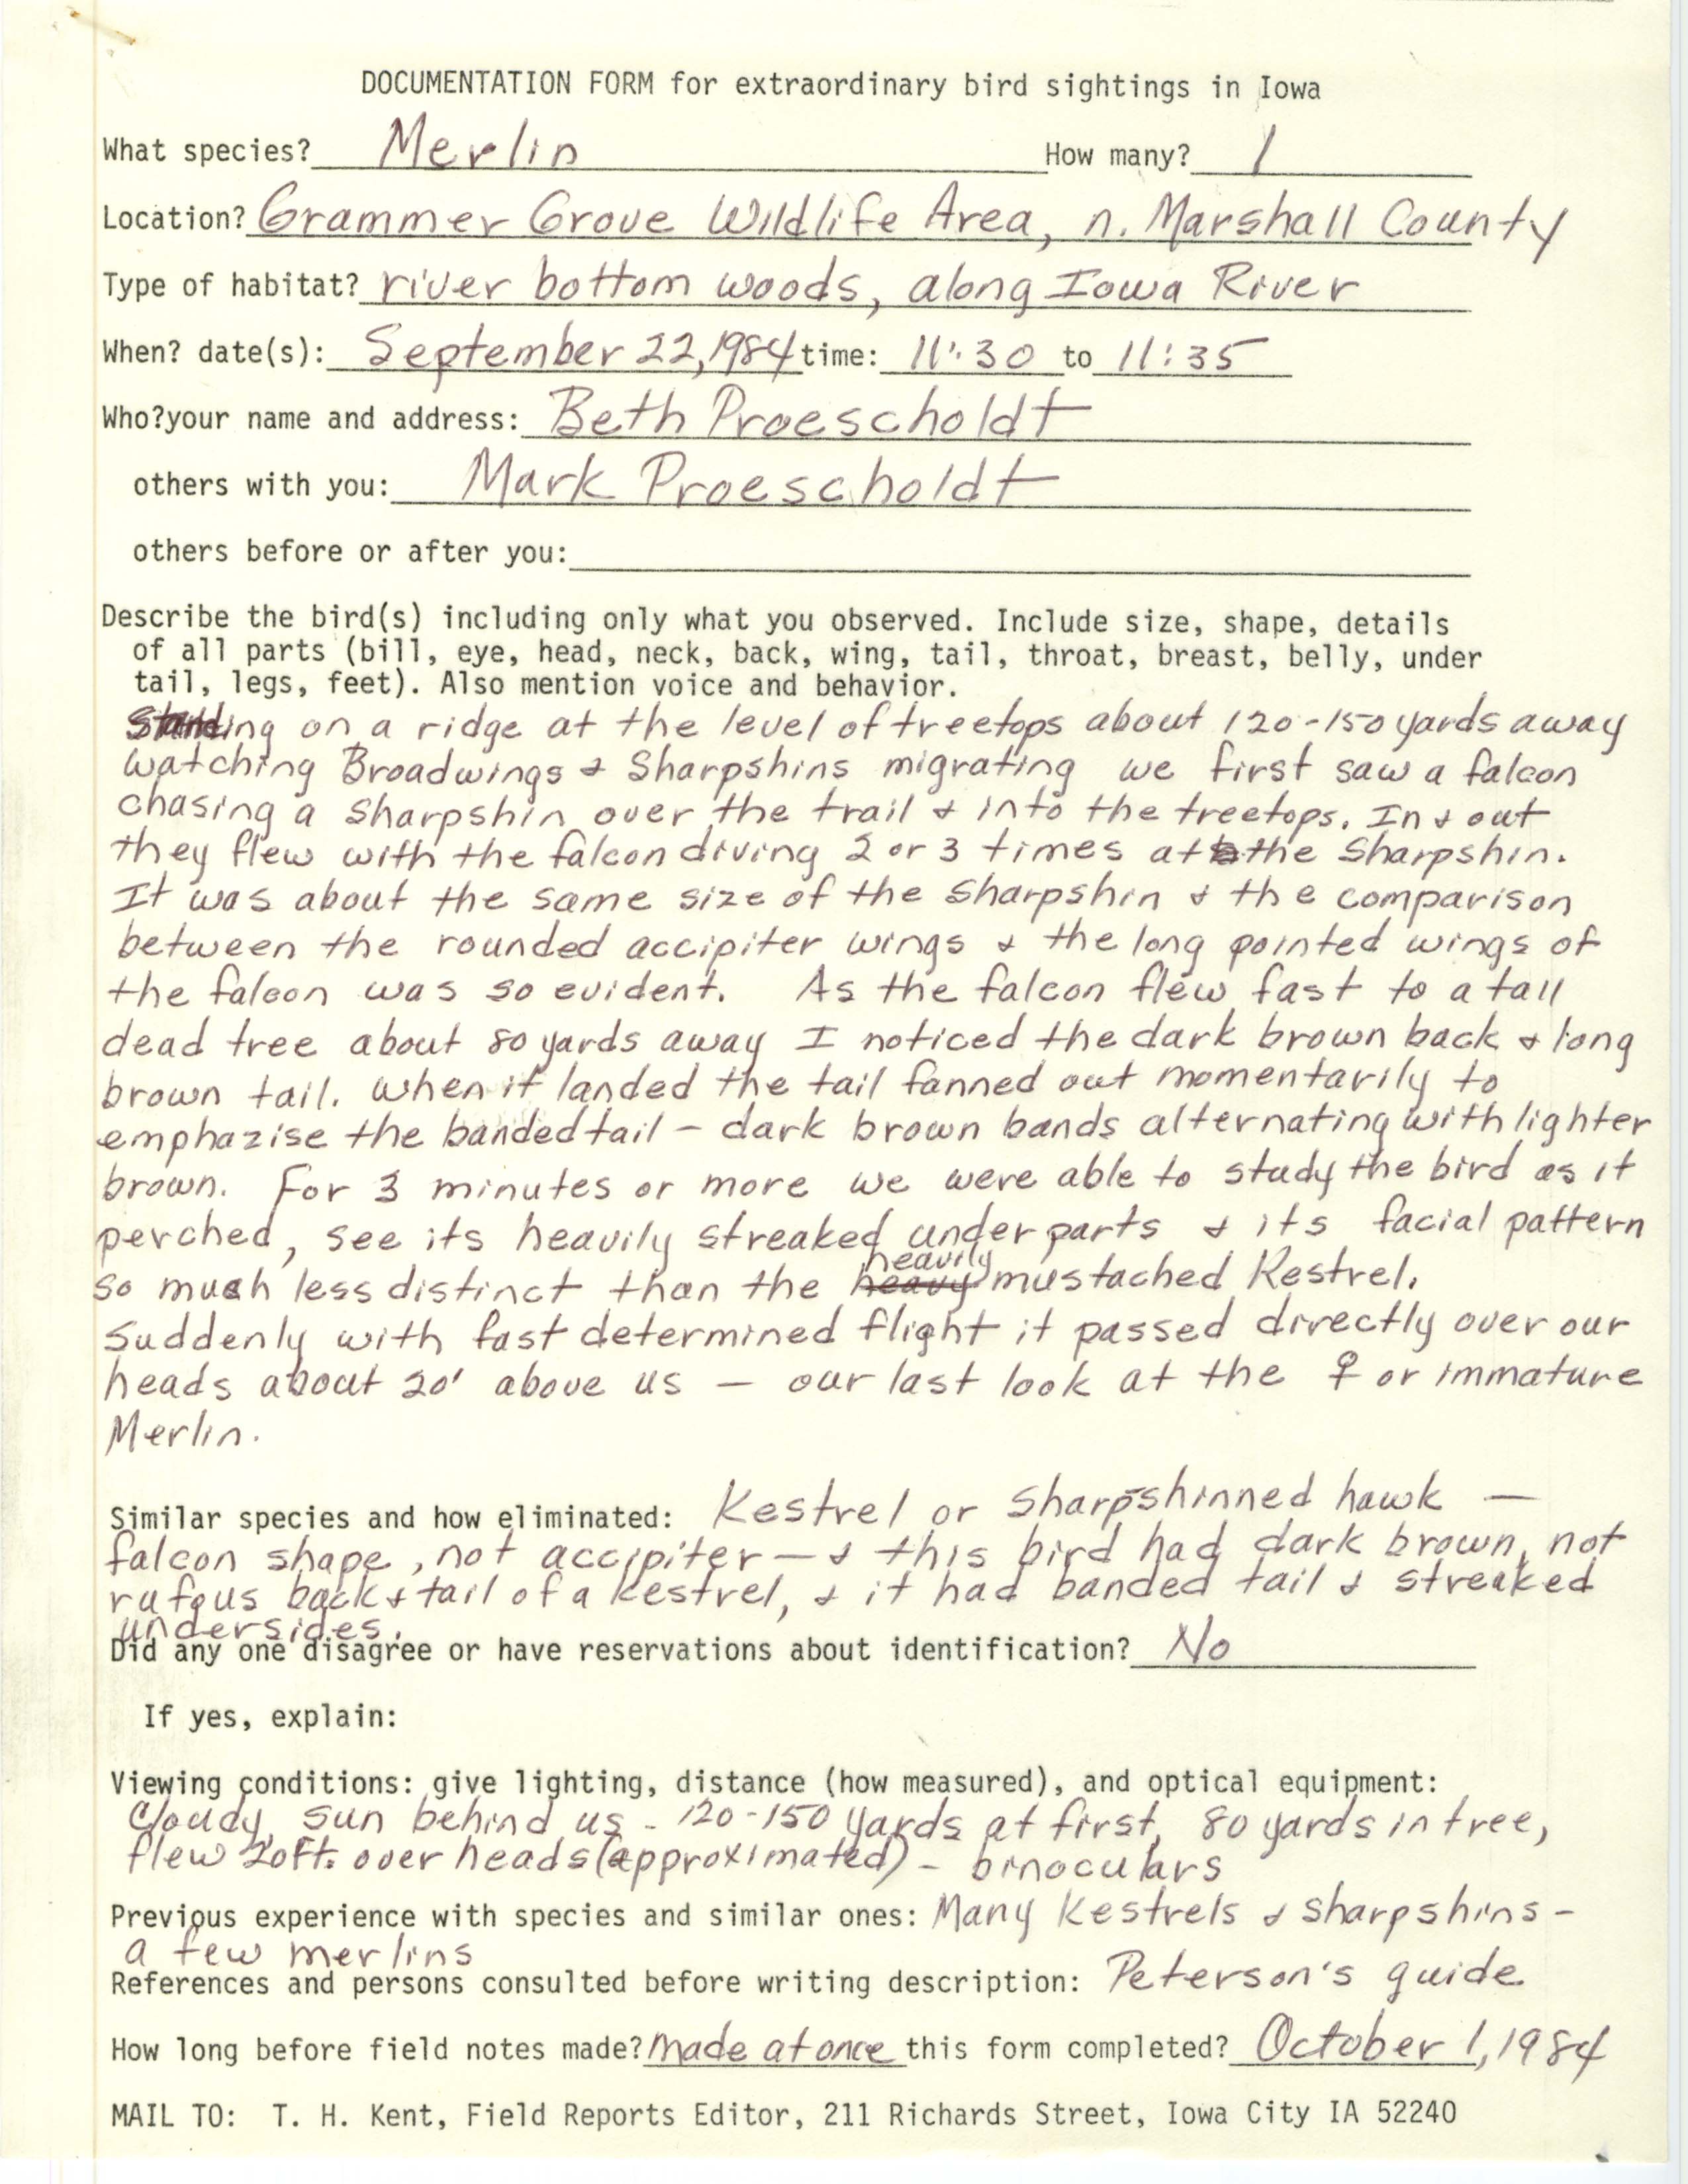 Rare bird documentation form for Merlin at Grammer Grove Wildlife Area, 1984